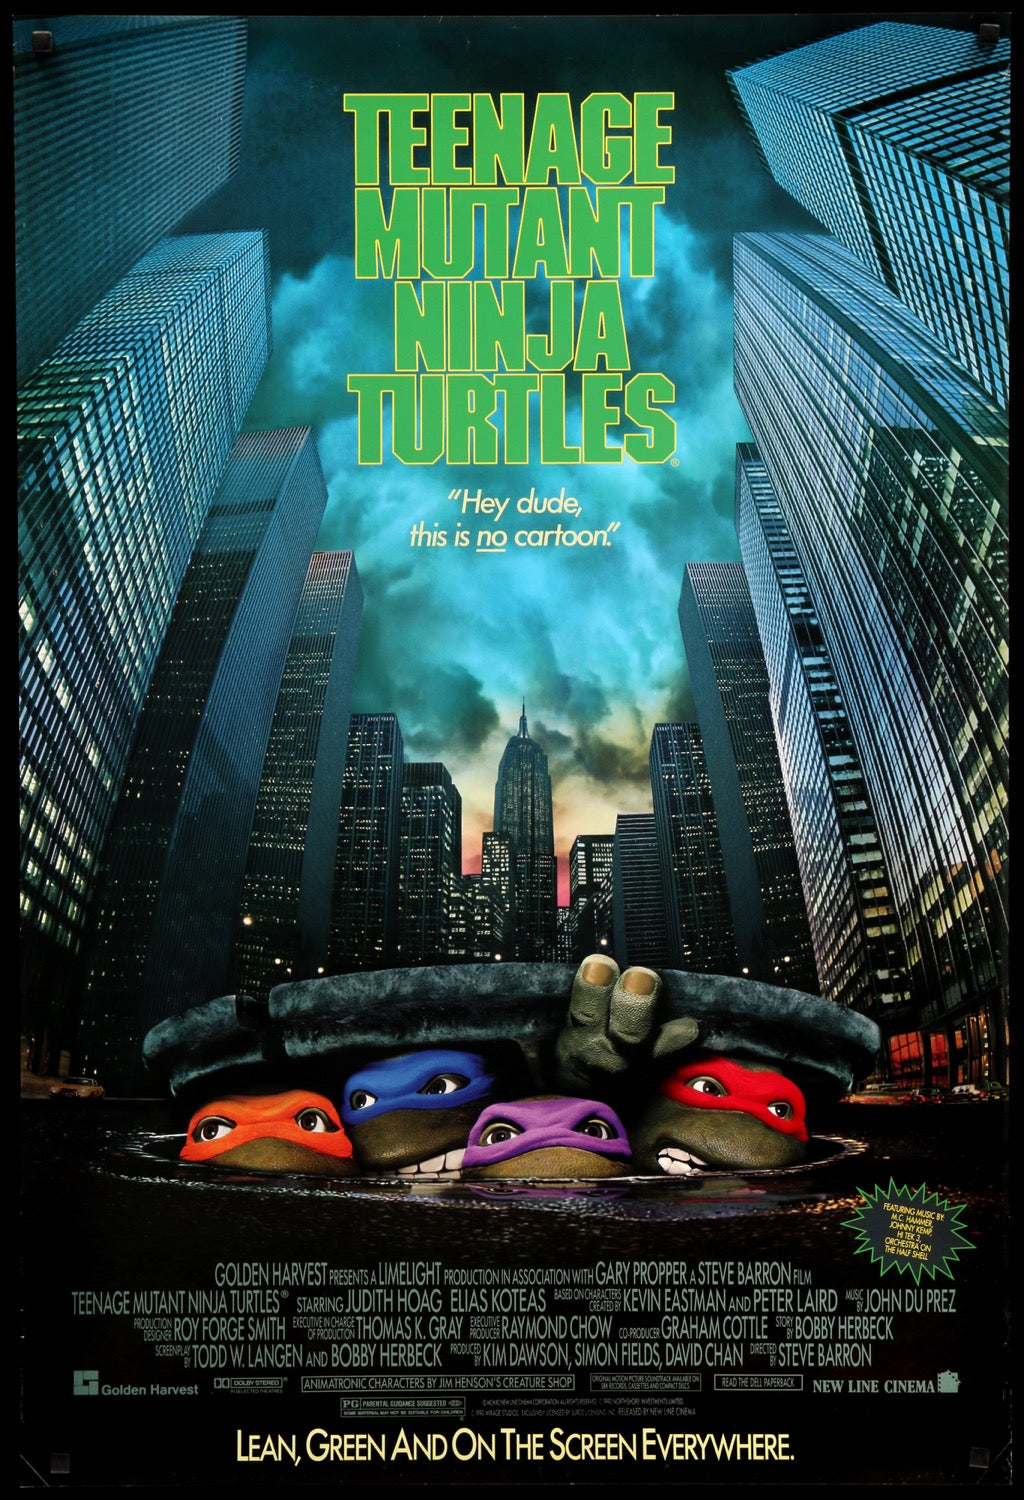 Teenage Mutant Ninja Turtles (1990) original movie poster for sale at Original Film Art